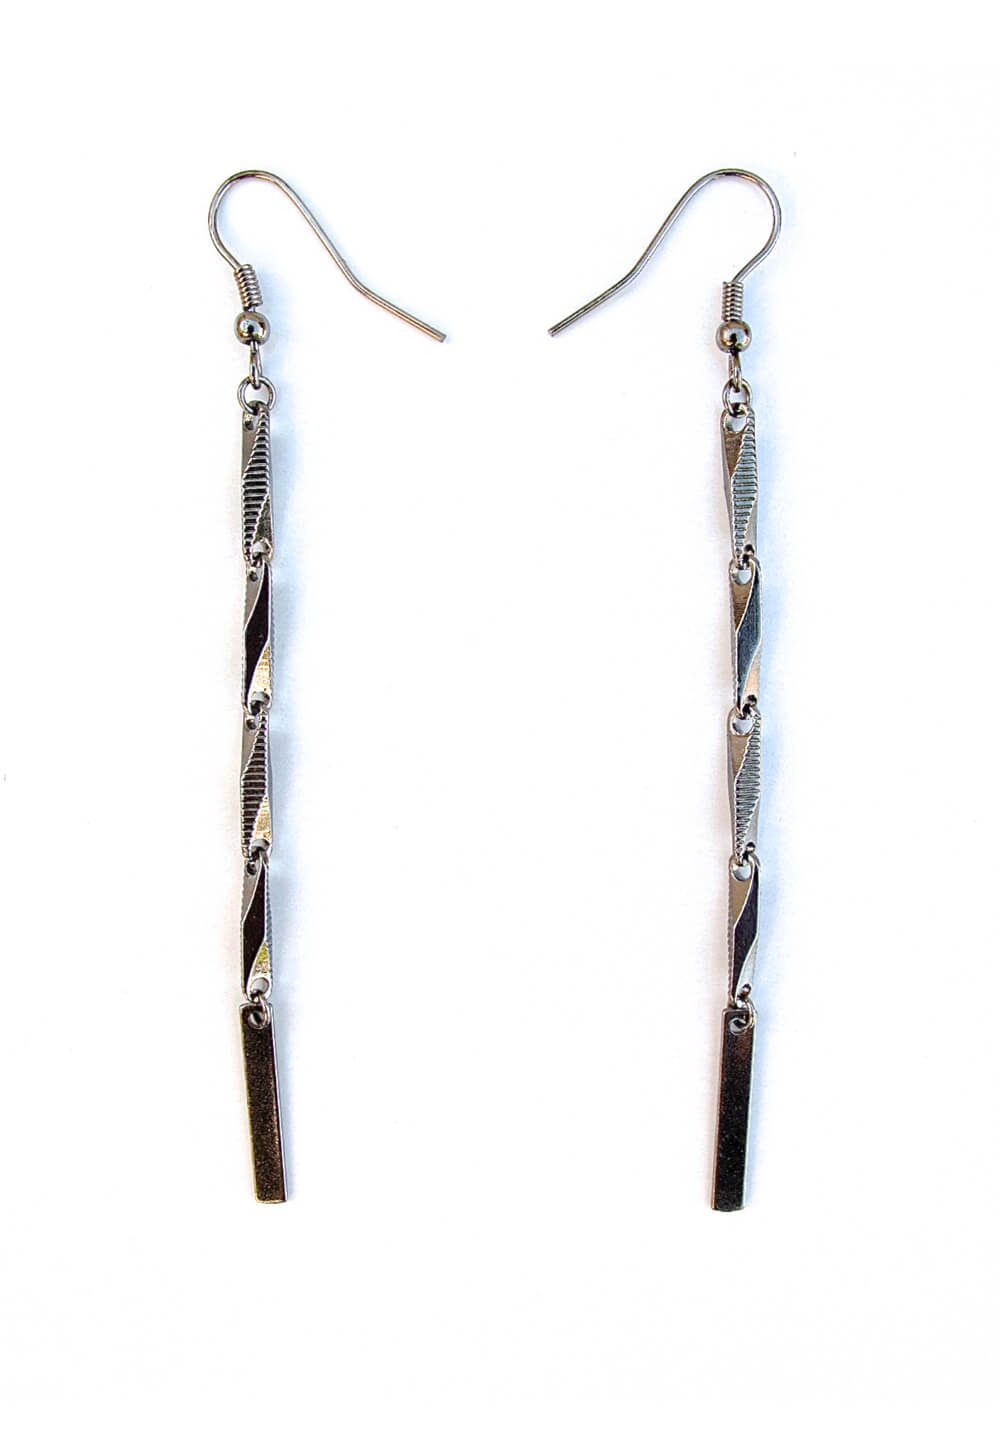 chain & bar earrings - gunmetal